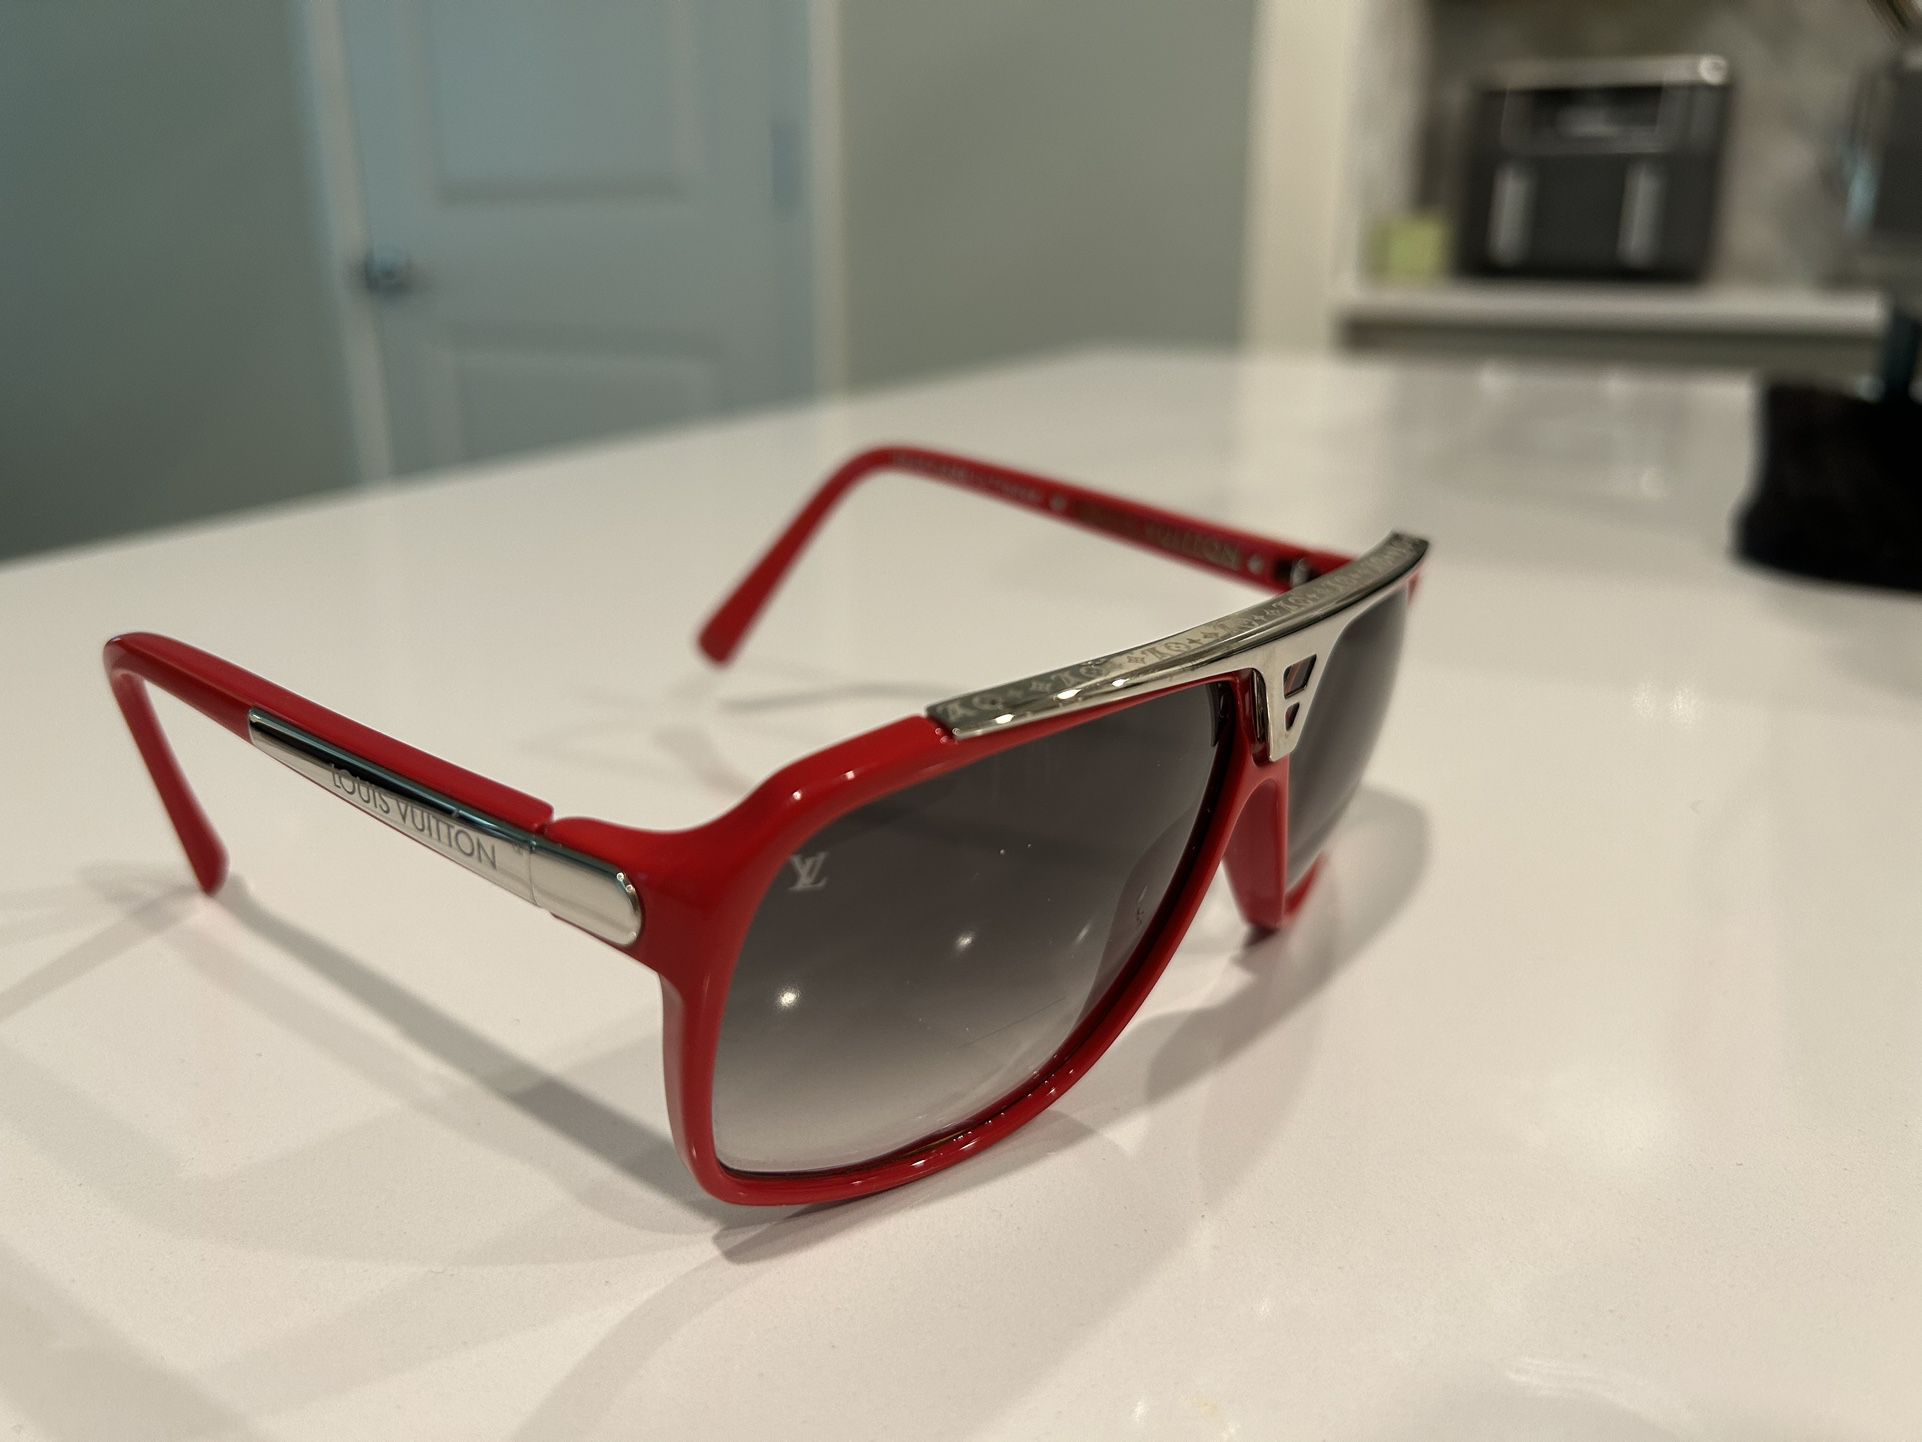 LOUIS VUITTON attitude arviator sunglasses model number ZO340U with case  for Sale in Phoenix, AZ - OfferUp